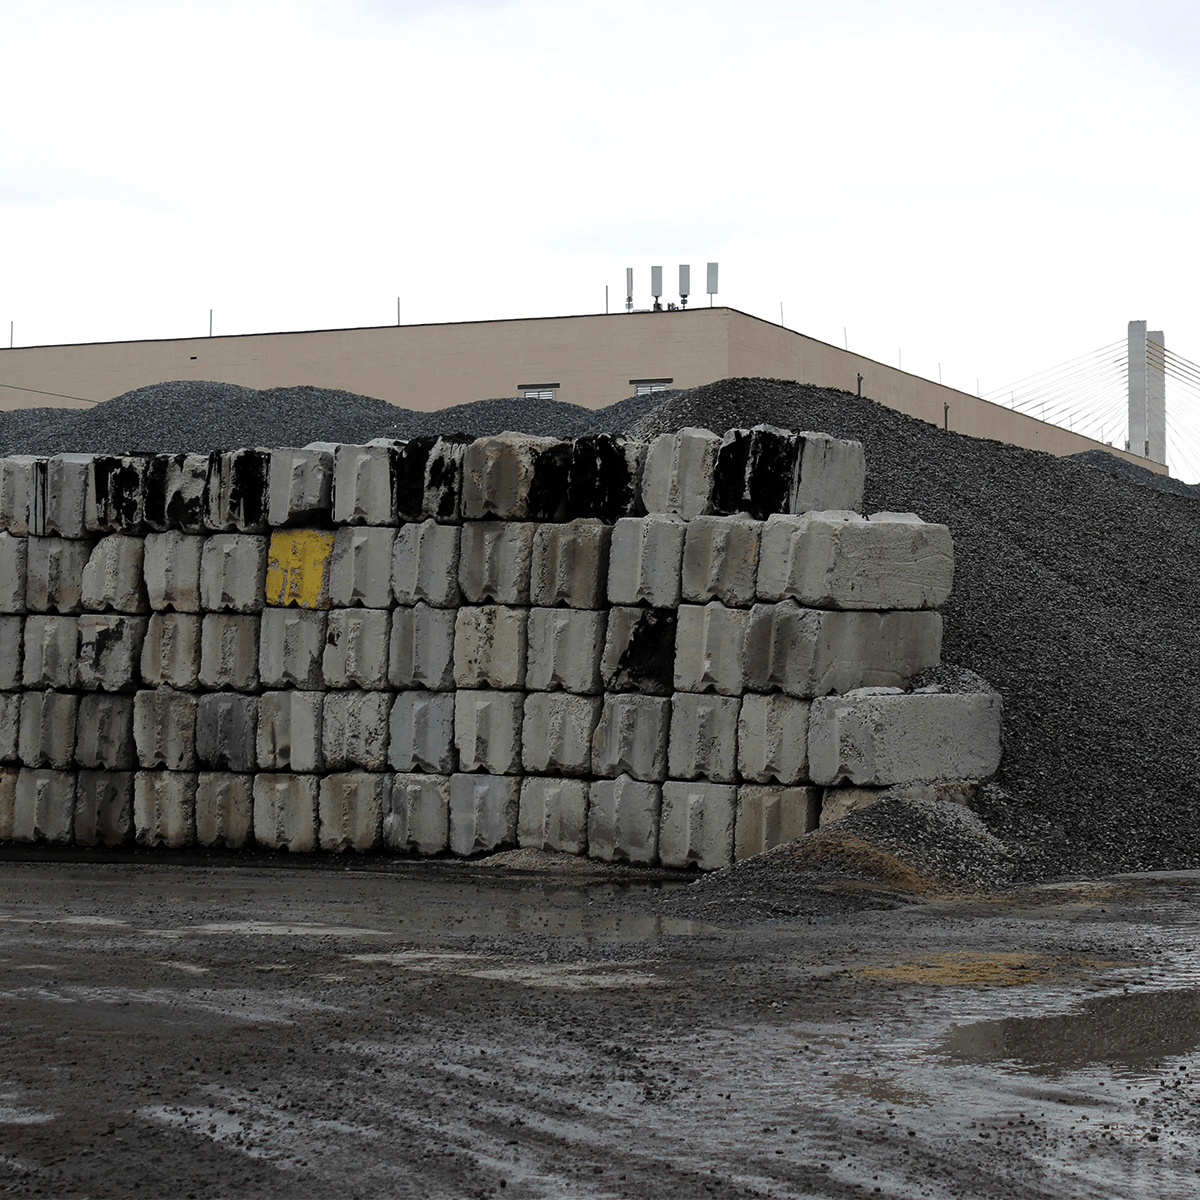 Storage area at Green Asphalt where asphalt is stored